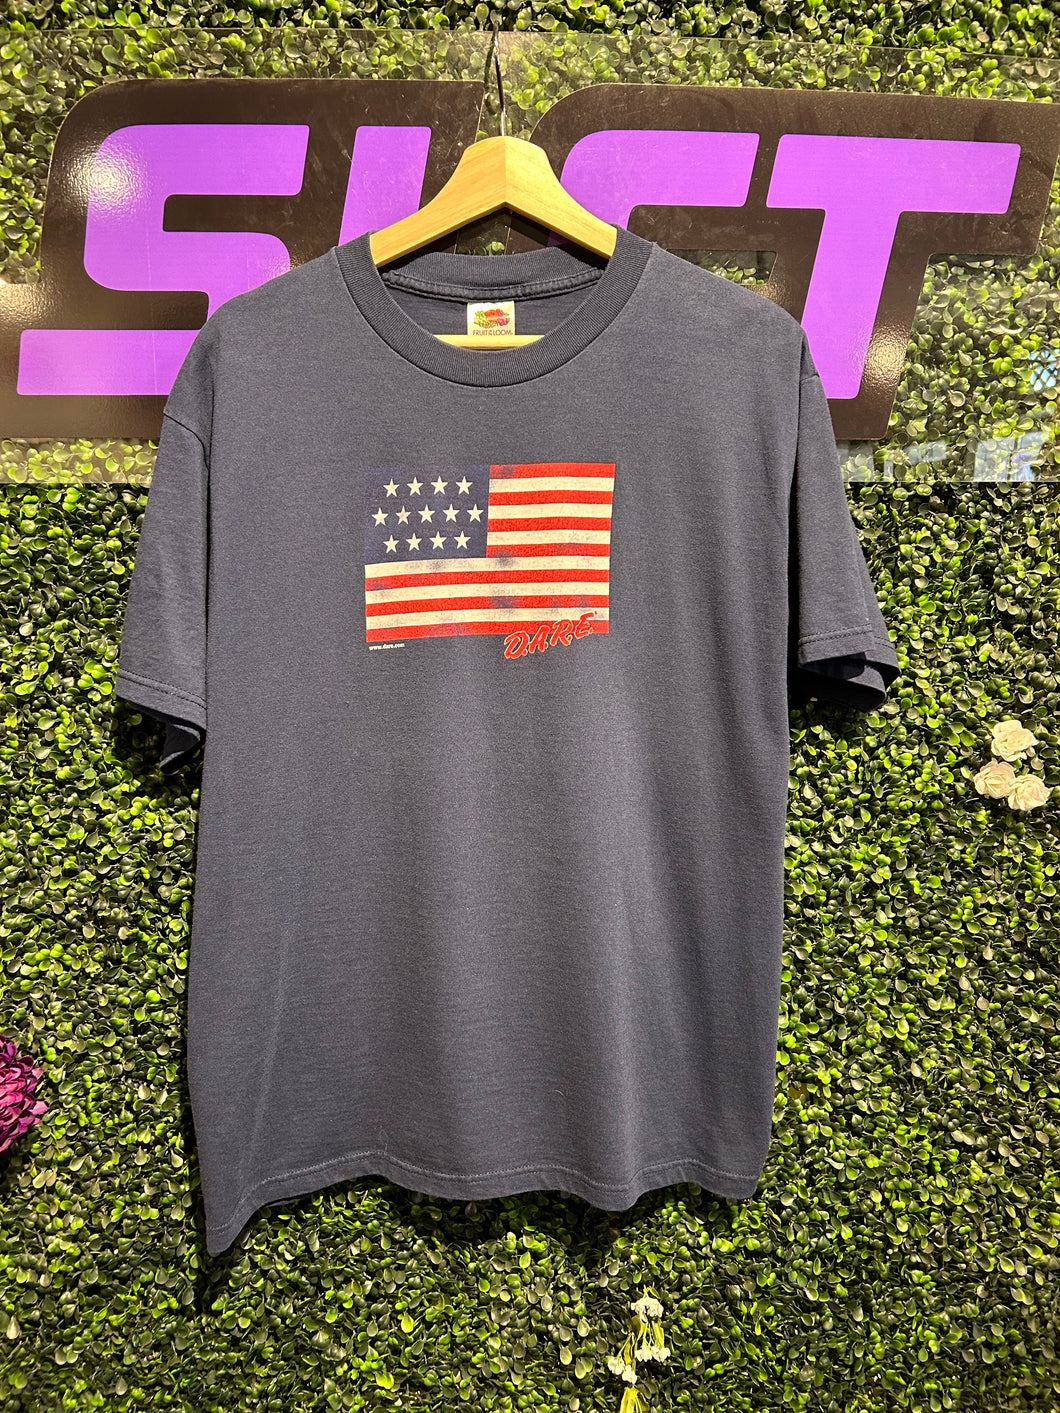 Vintage DARE USA Flag T-Shirt. Size Large